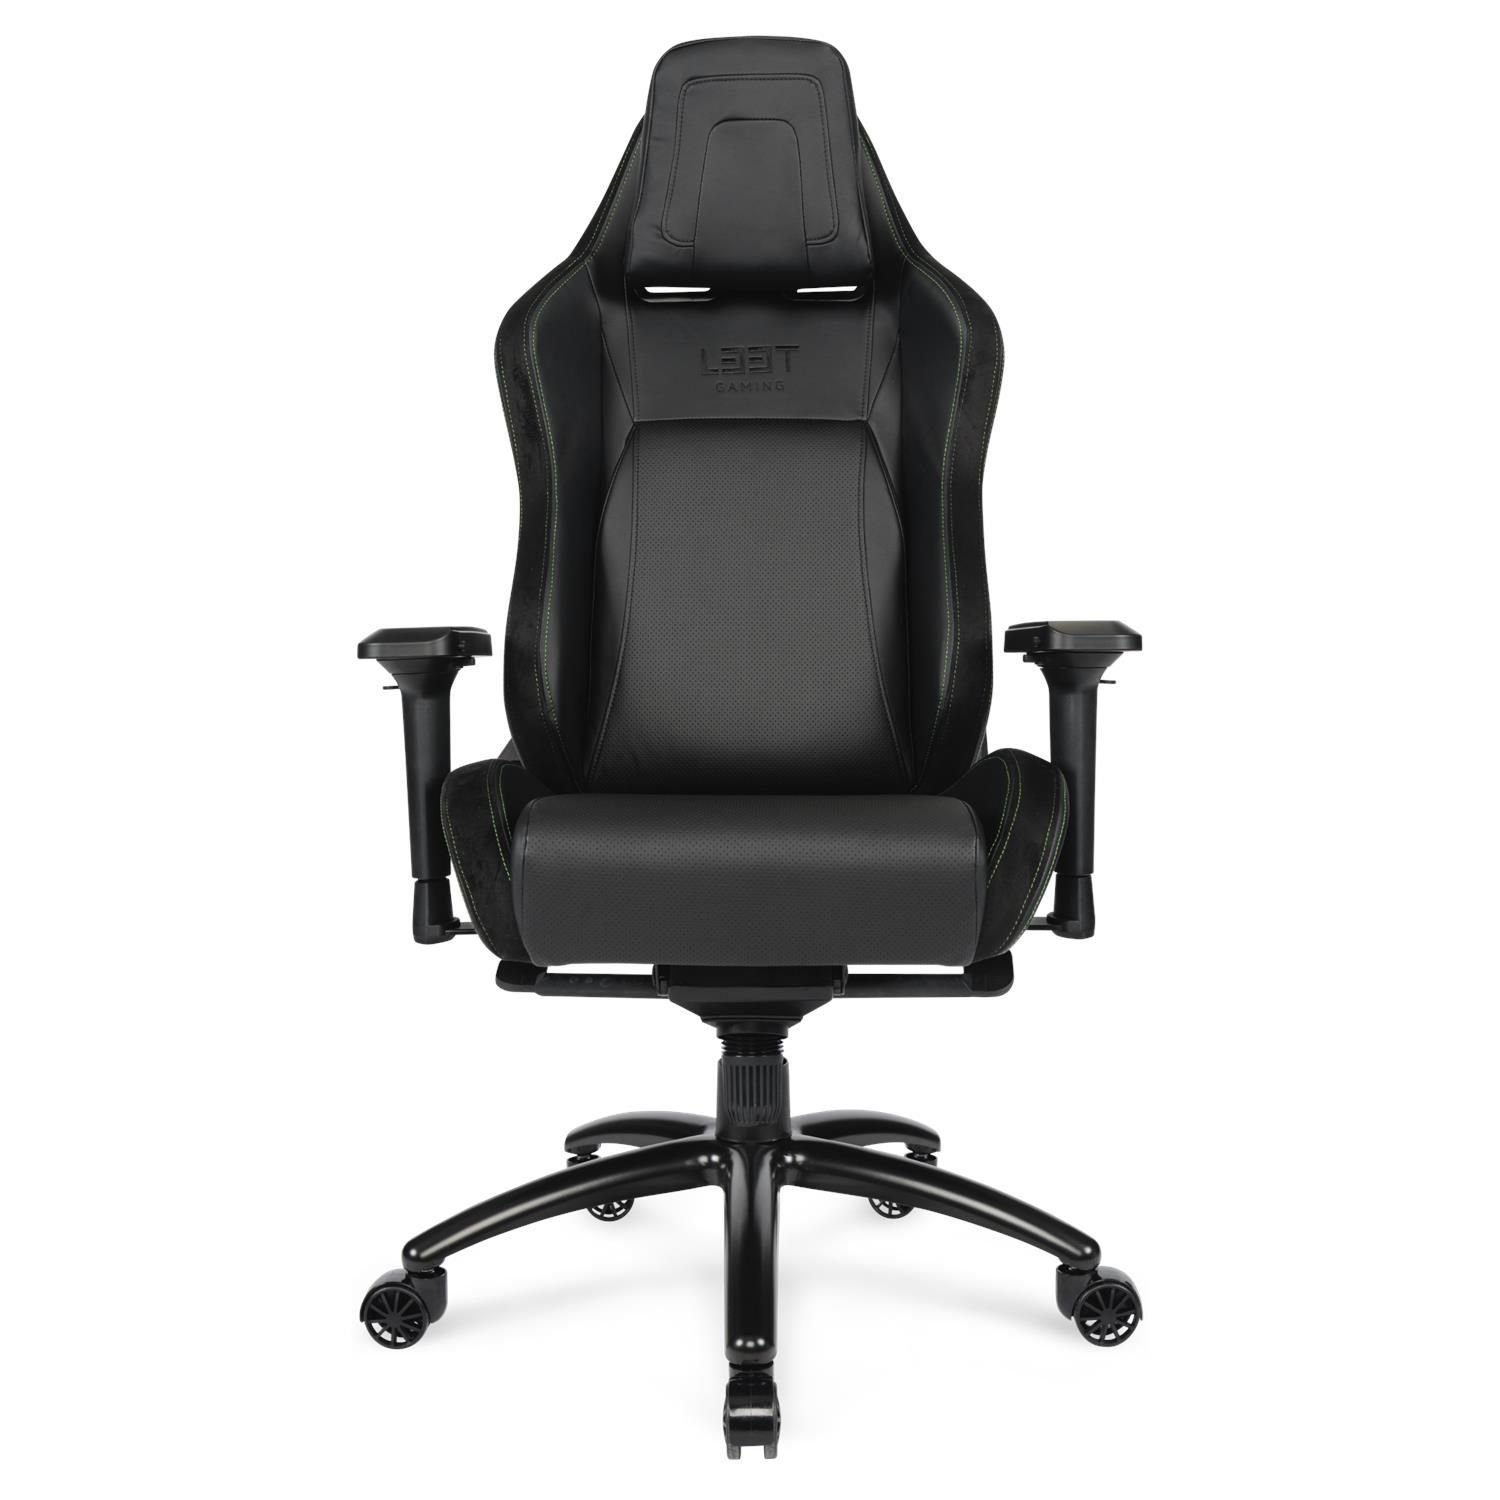 L33T Gaming-Stuhl E-Sport Pro Comfort Gaming Bürostuhl Racing Stuhl (kein Set), neigbar, höhenverstellbar, belastbar bis 145kg schwarz